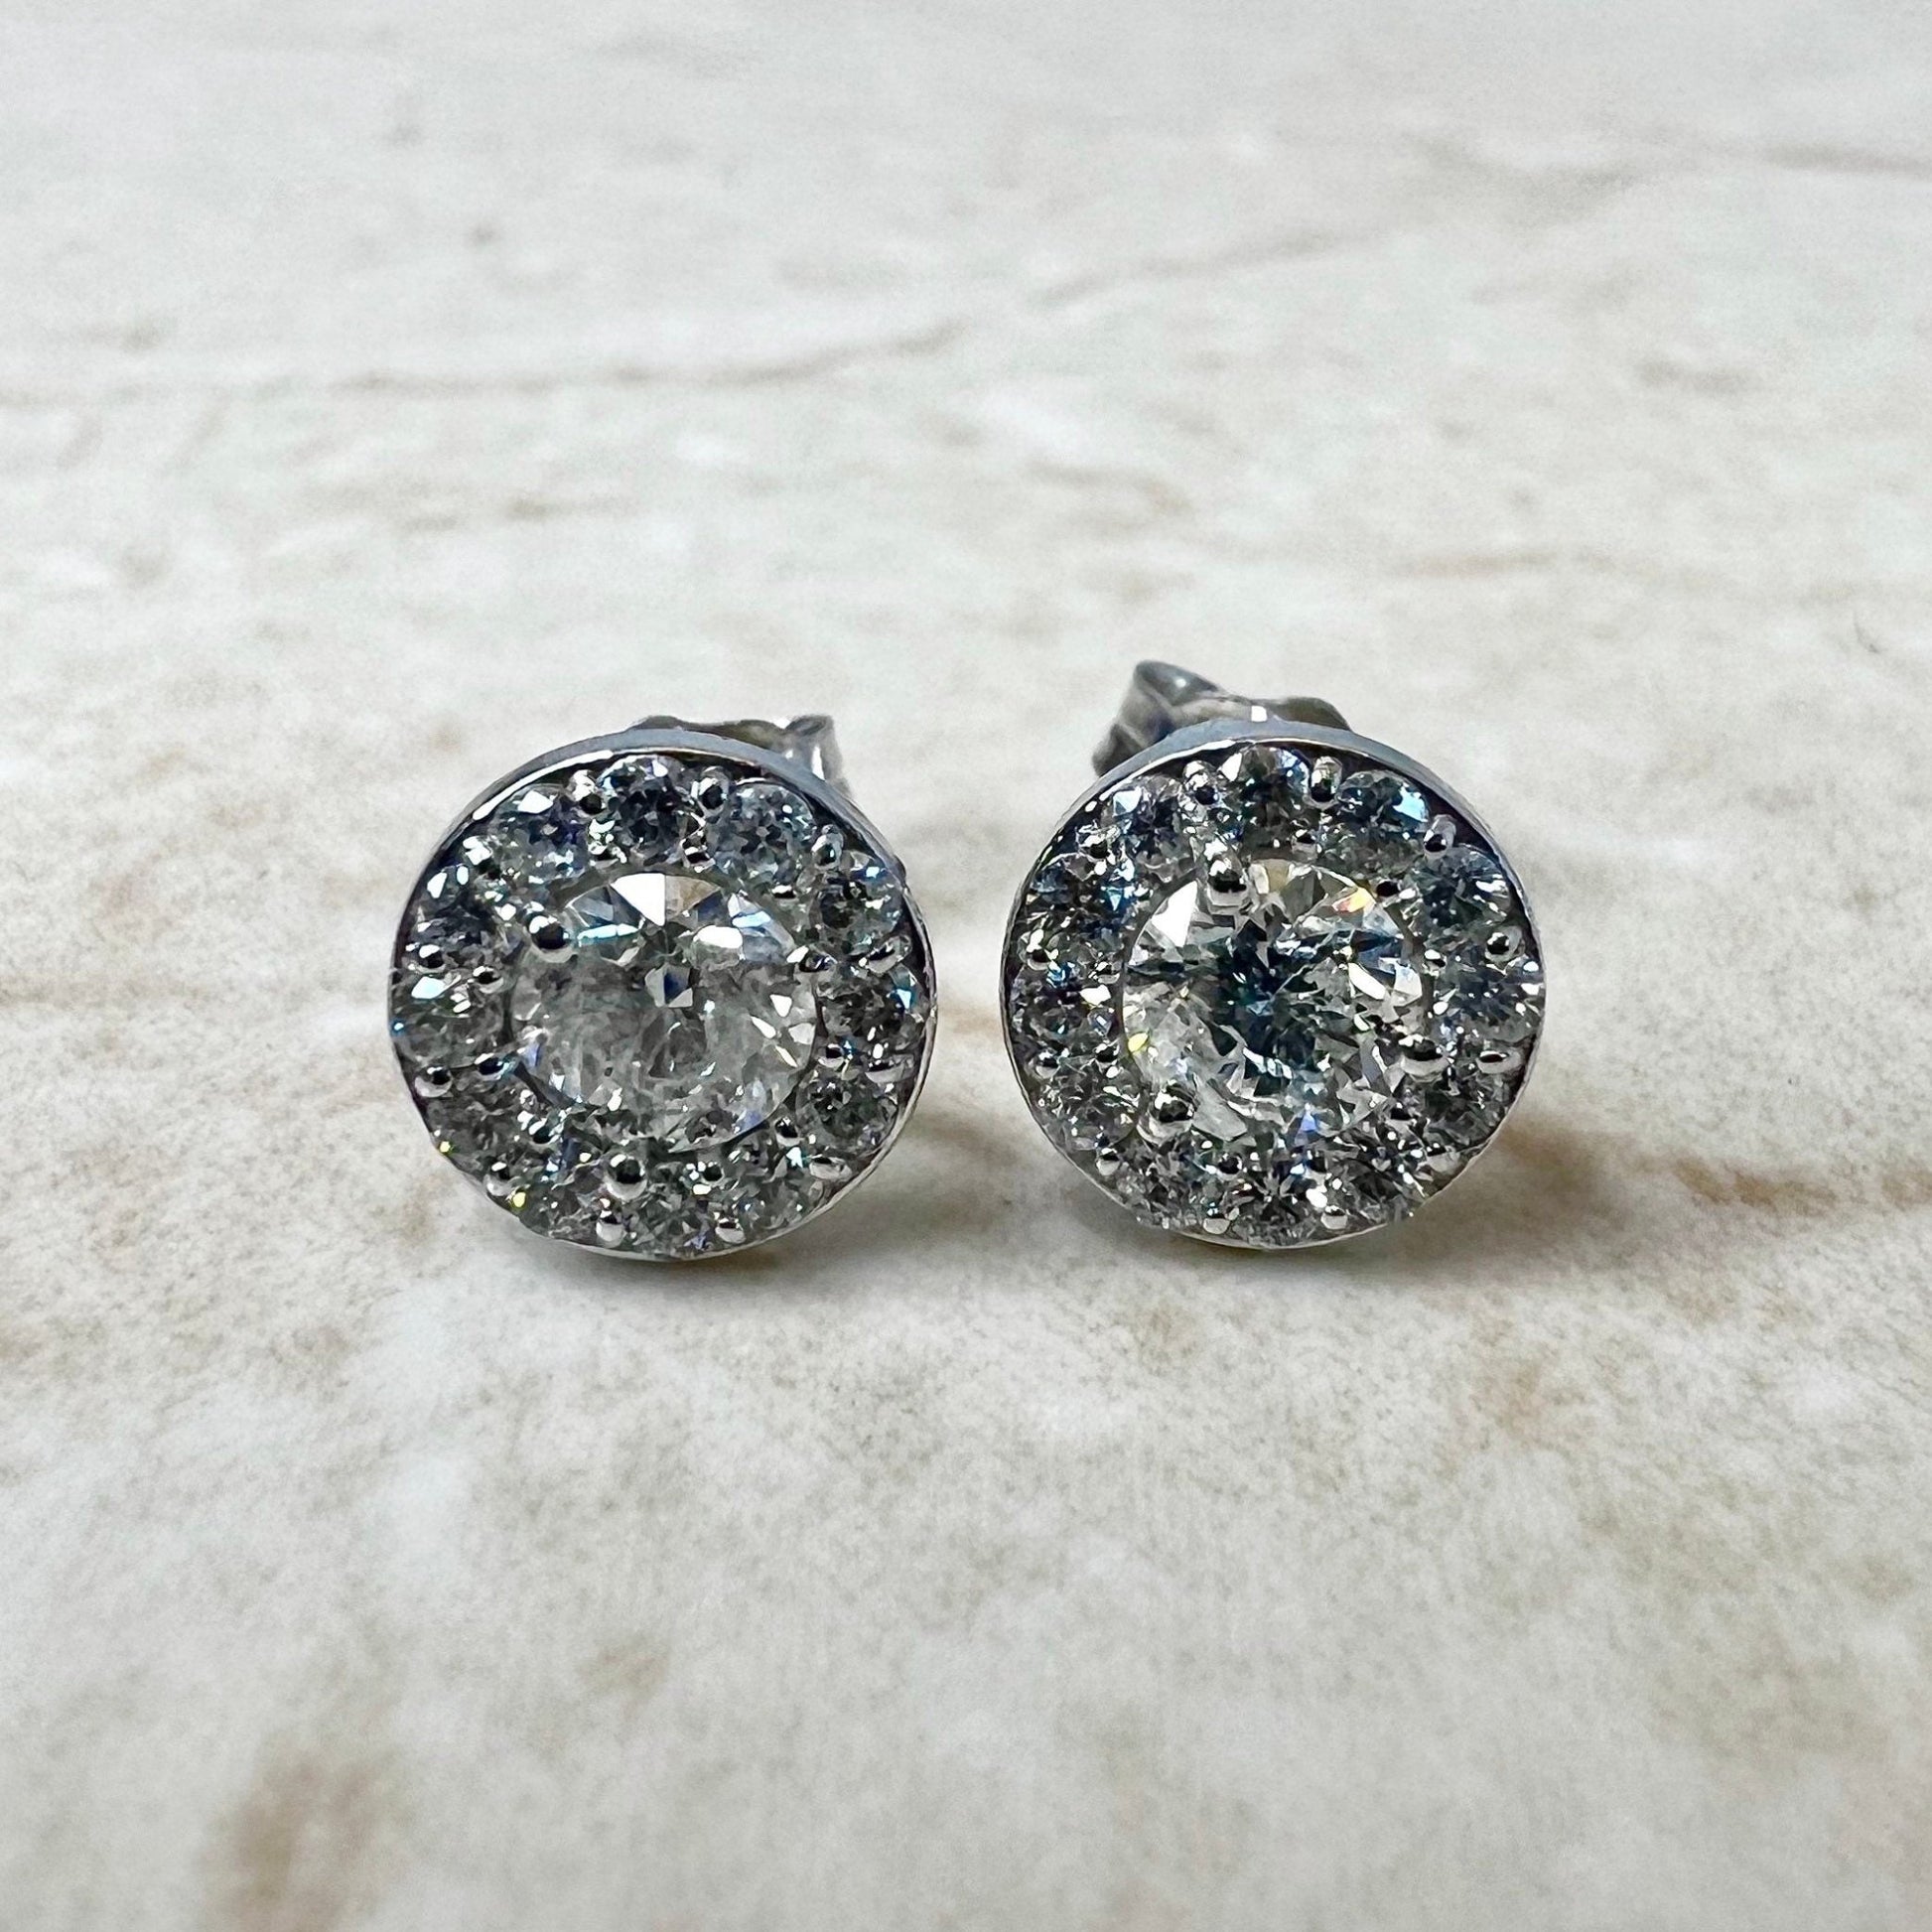 14K Round Diamond Halo Stud Earrings 0.75 CTTW - 14K White Gold Diamond Studs - Diamond Halo Earrings - Diamond Earrings -Best Gifts For Her